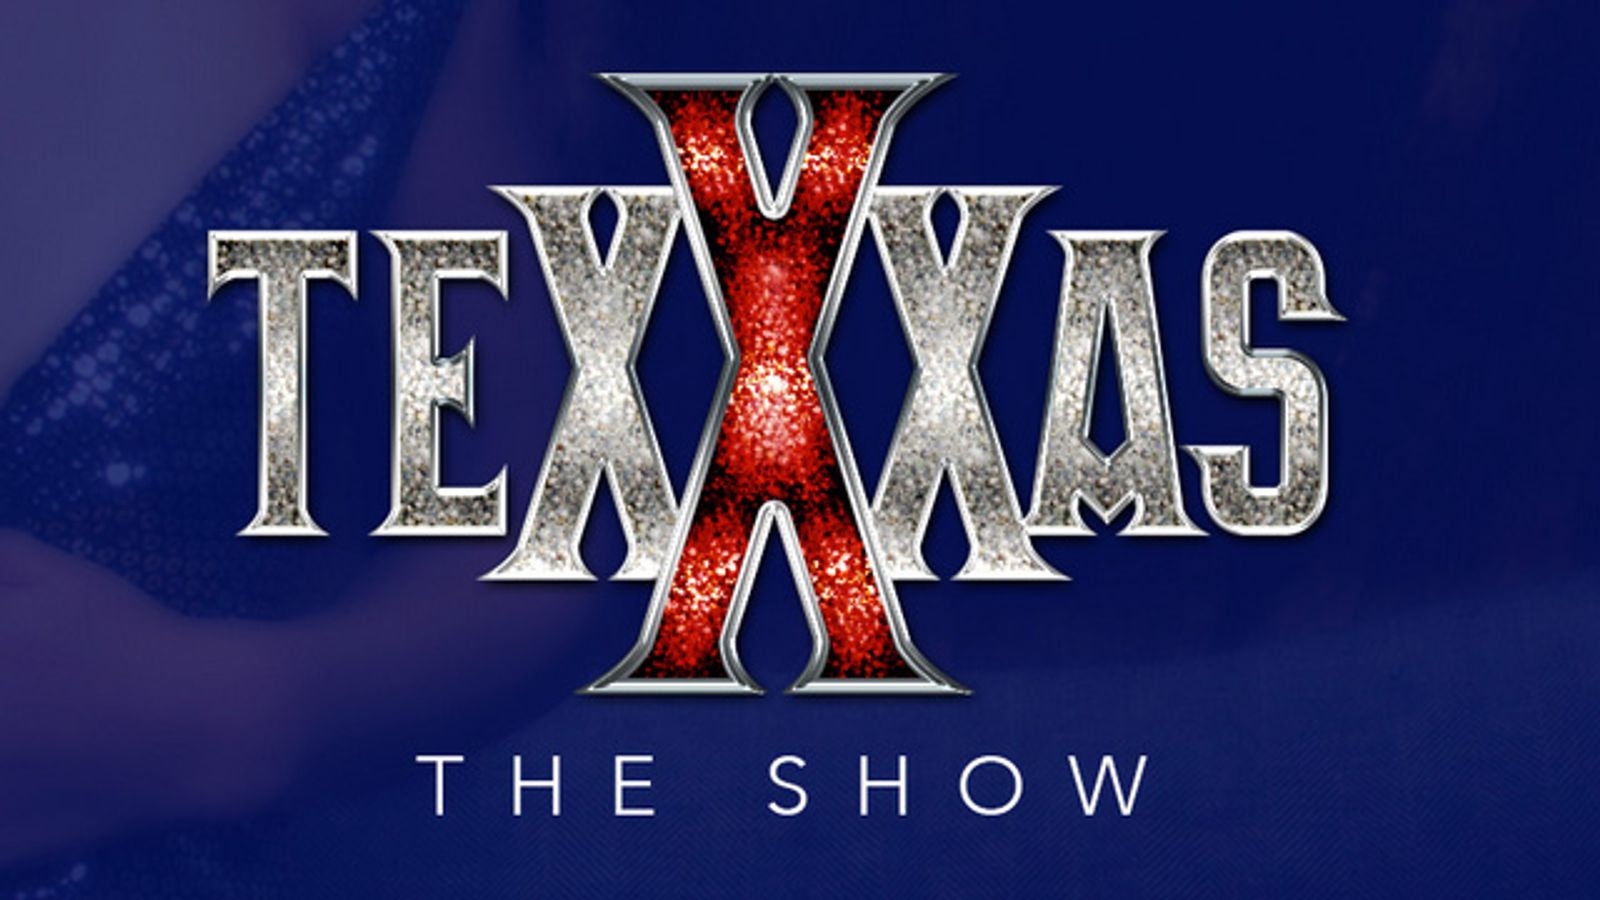 TEXXXAS The Show Announces New Location